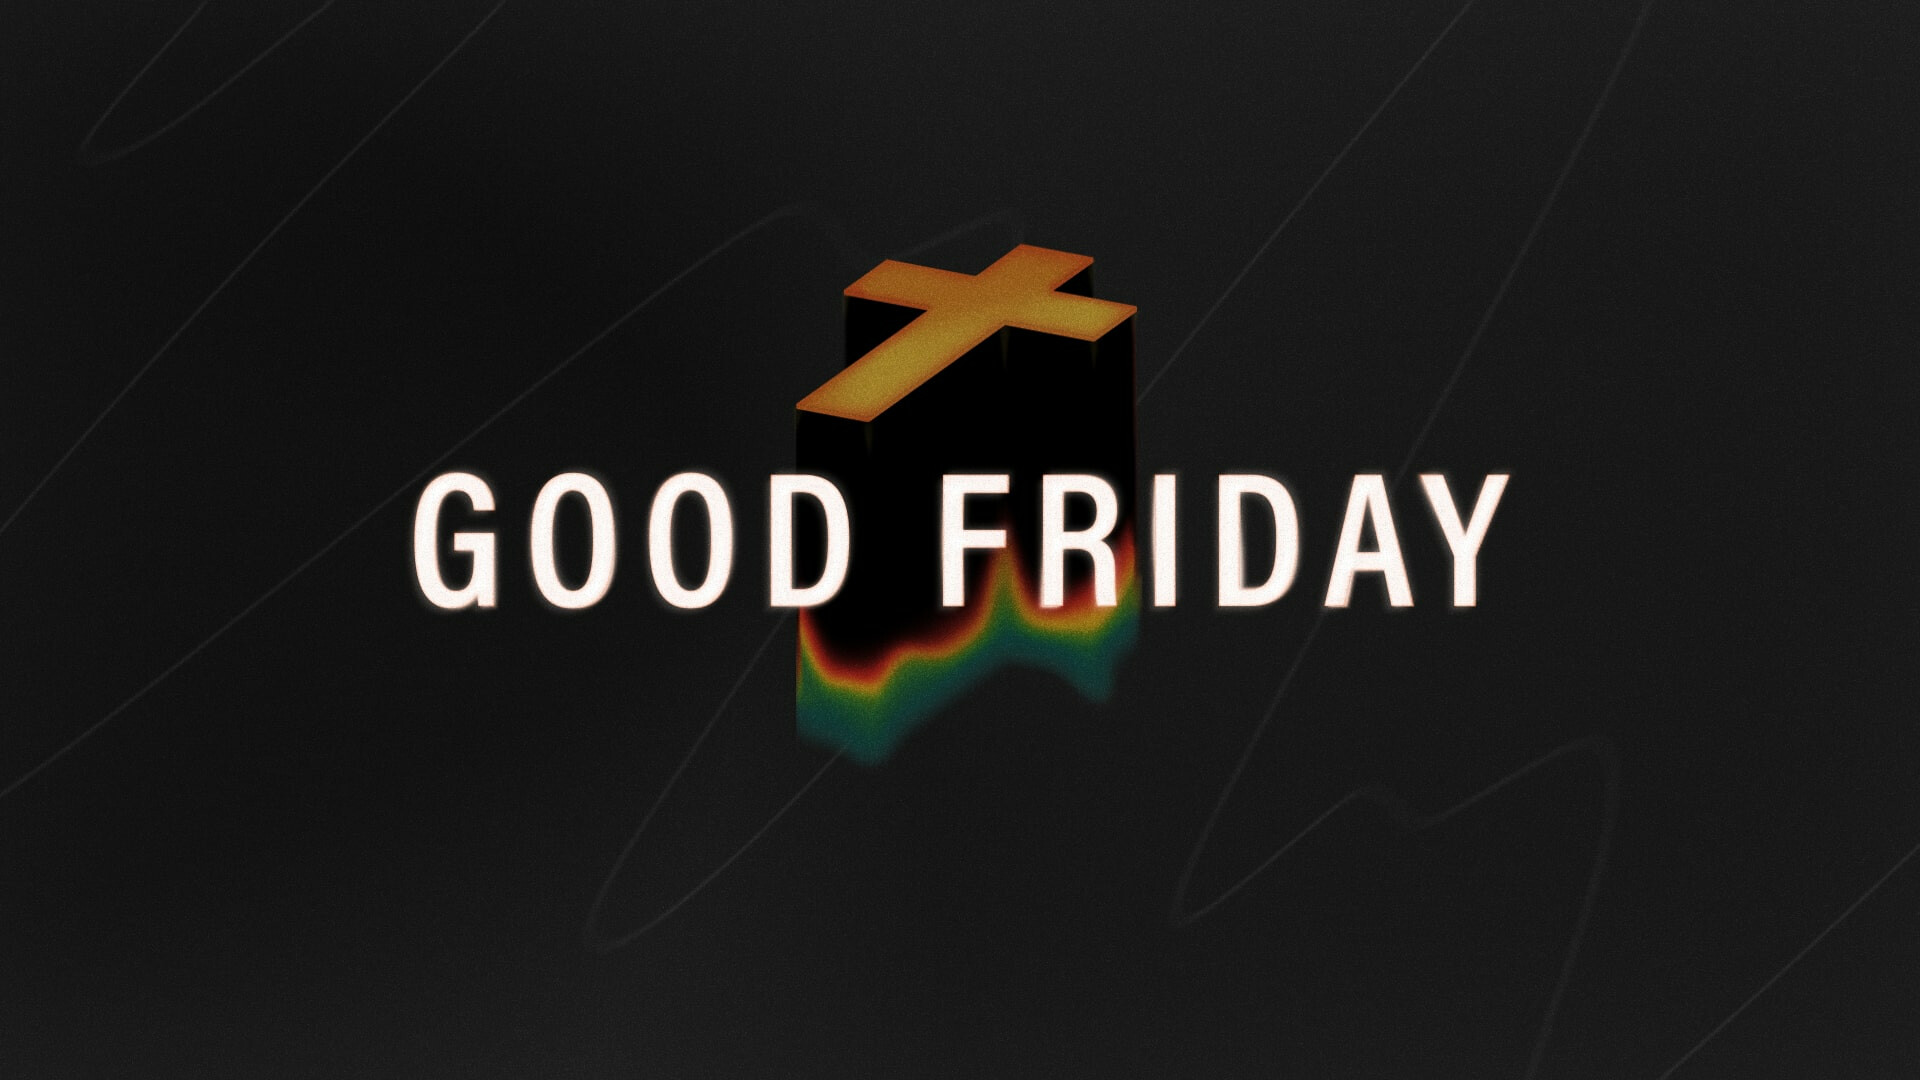 Watch Good Friday 2021 - Good Friday Service